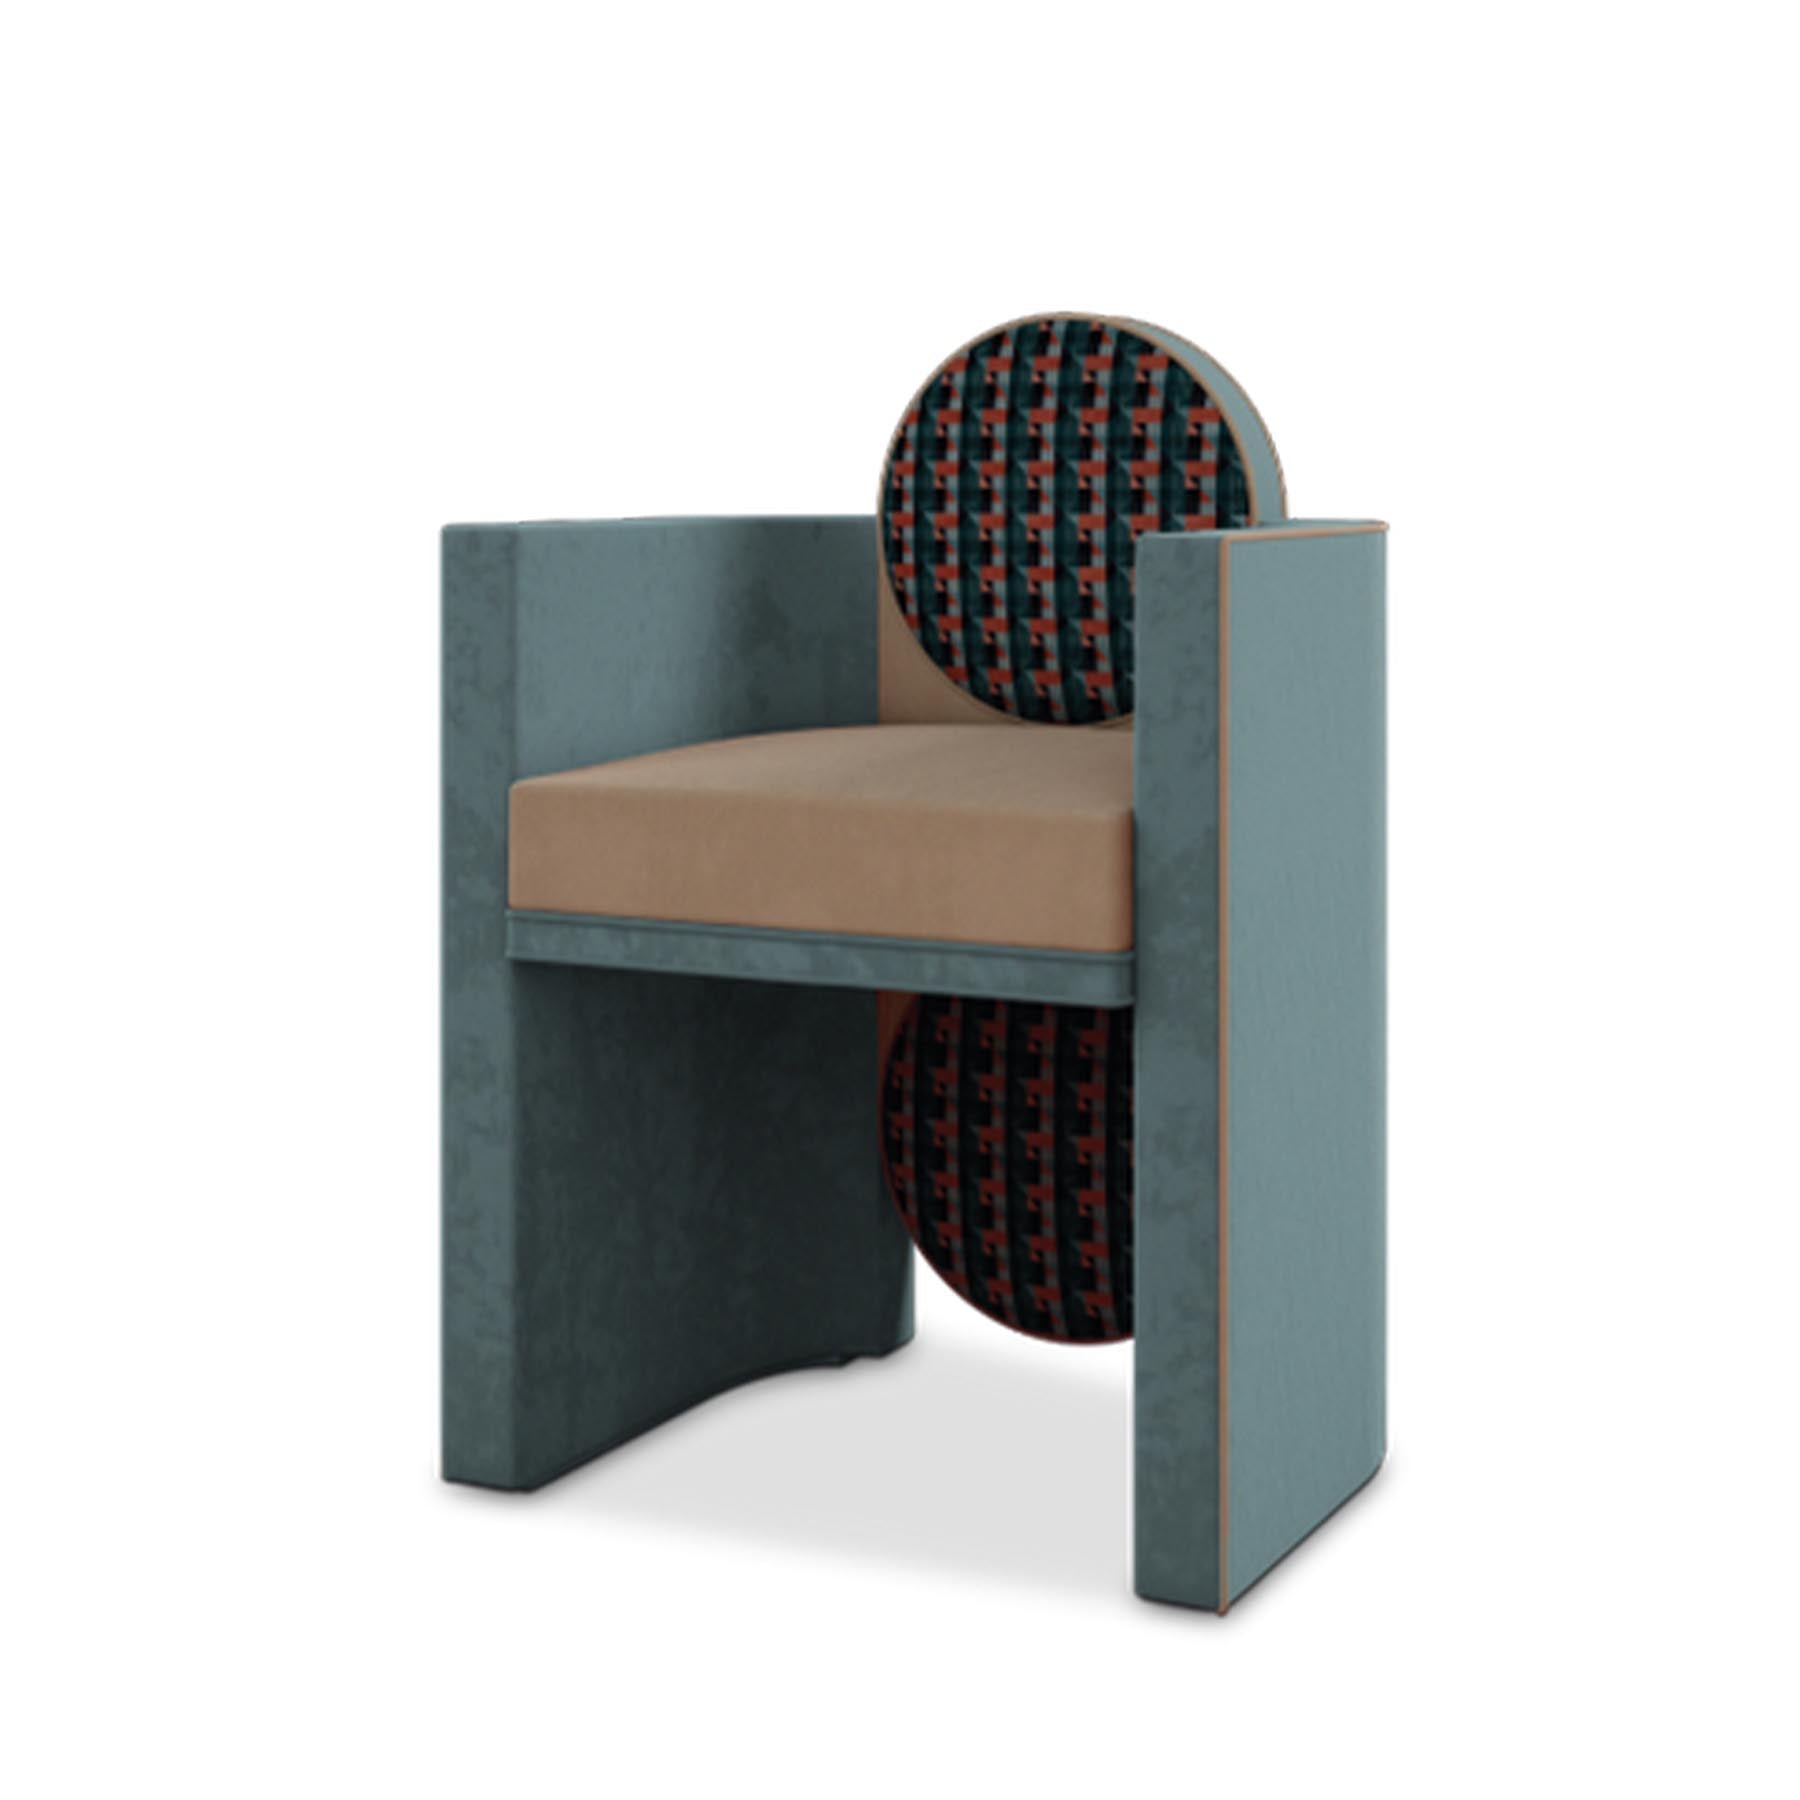 MAK SUH MUH - CHAIR | Modern Furniture + Decor